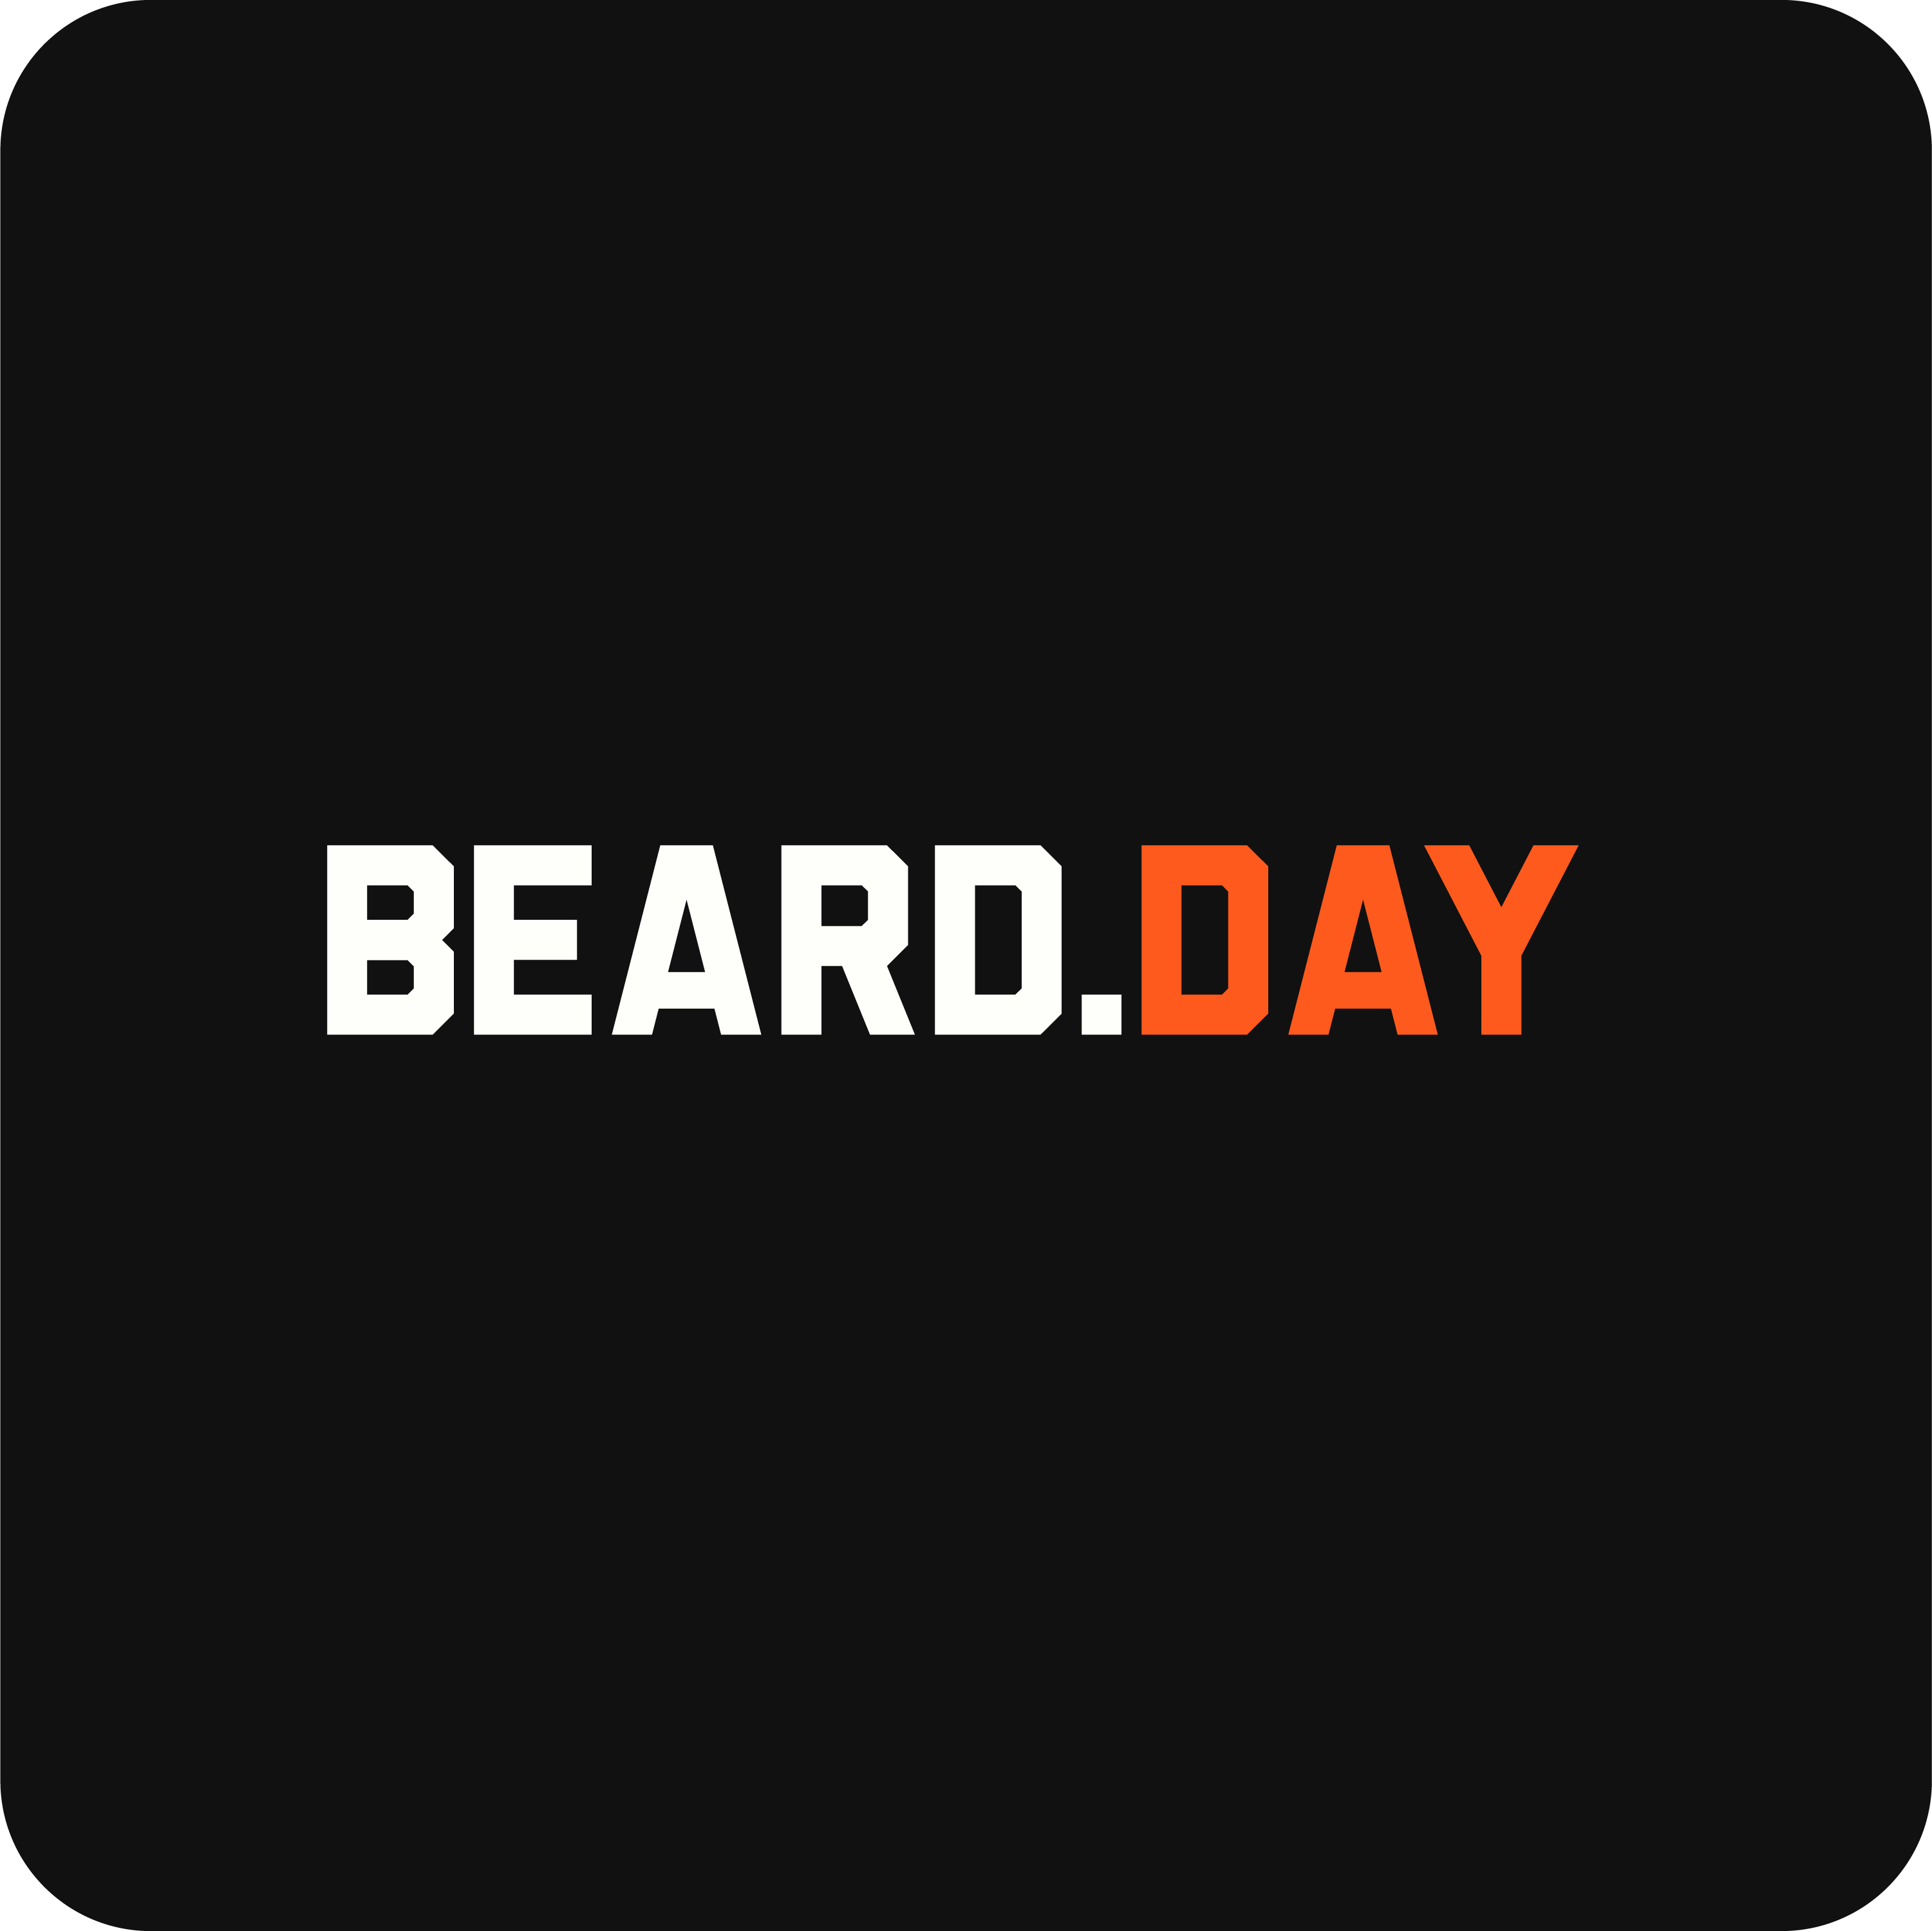 beard.day custom logo product card image